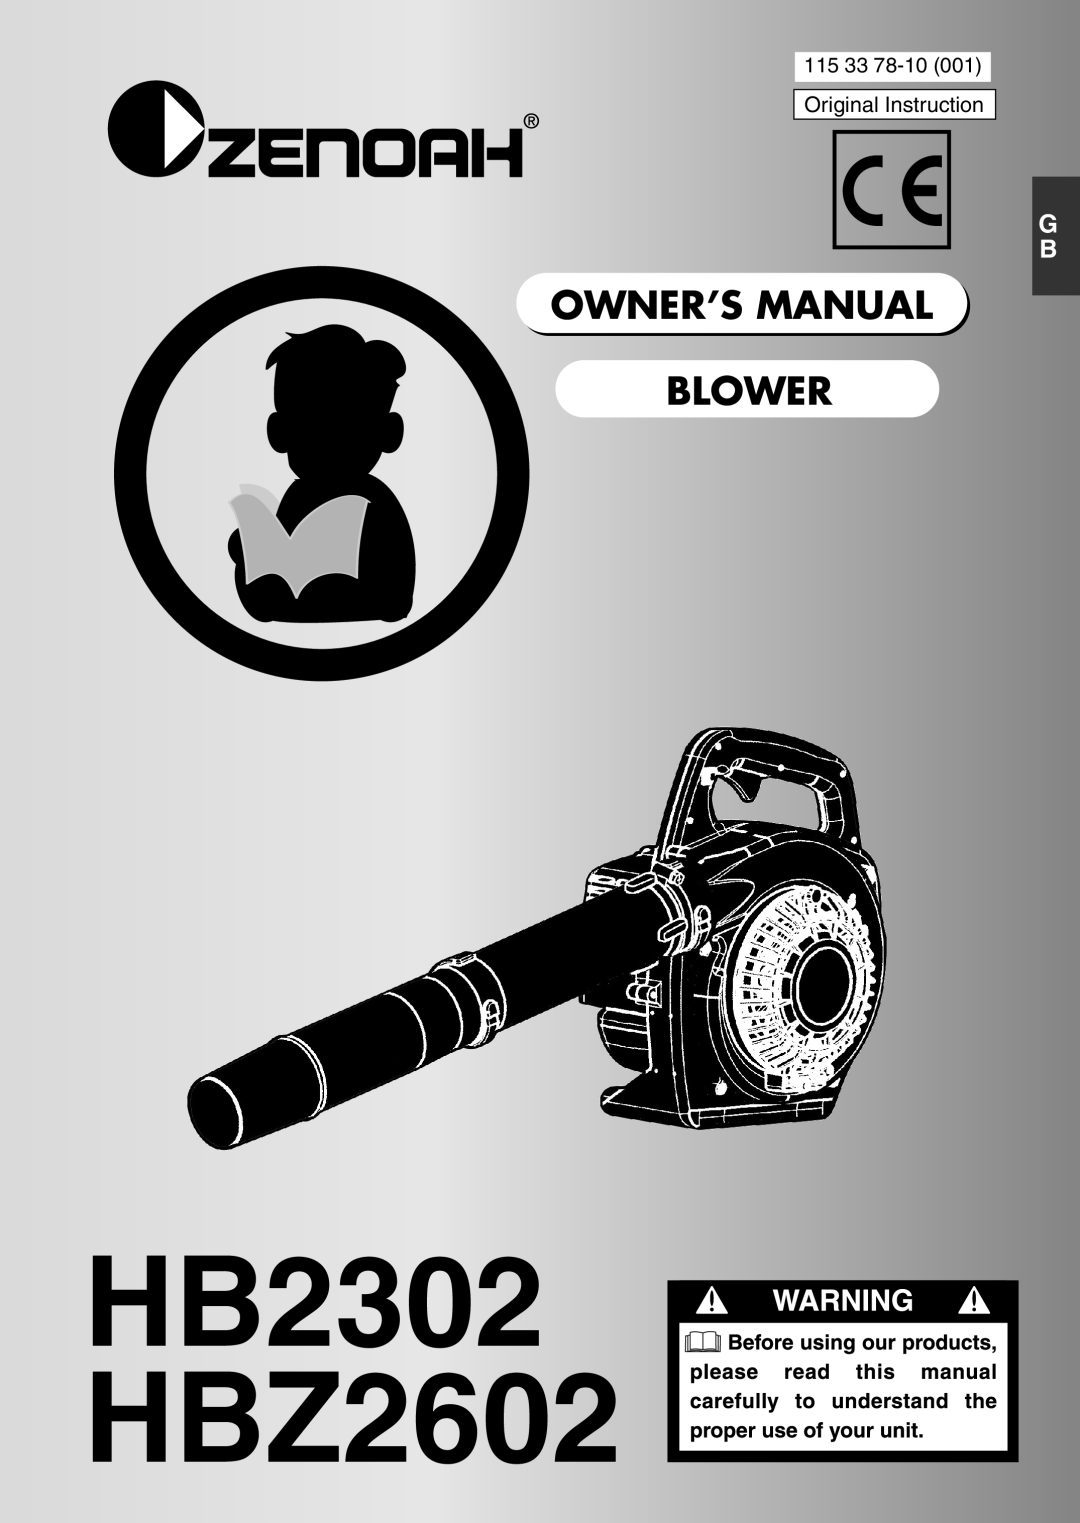 Zenoah owner manual HB2302 HBZ2602, Owner’S Manual Blower, Original Instruction, 115 33 